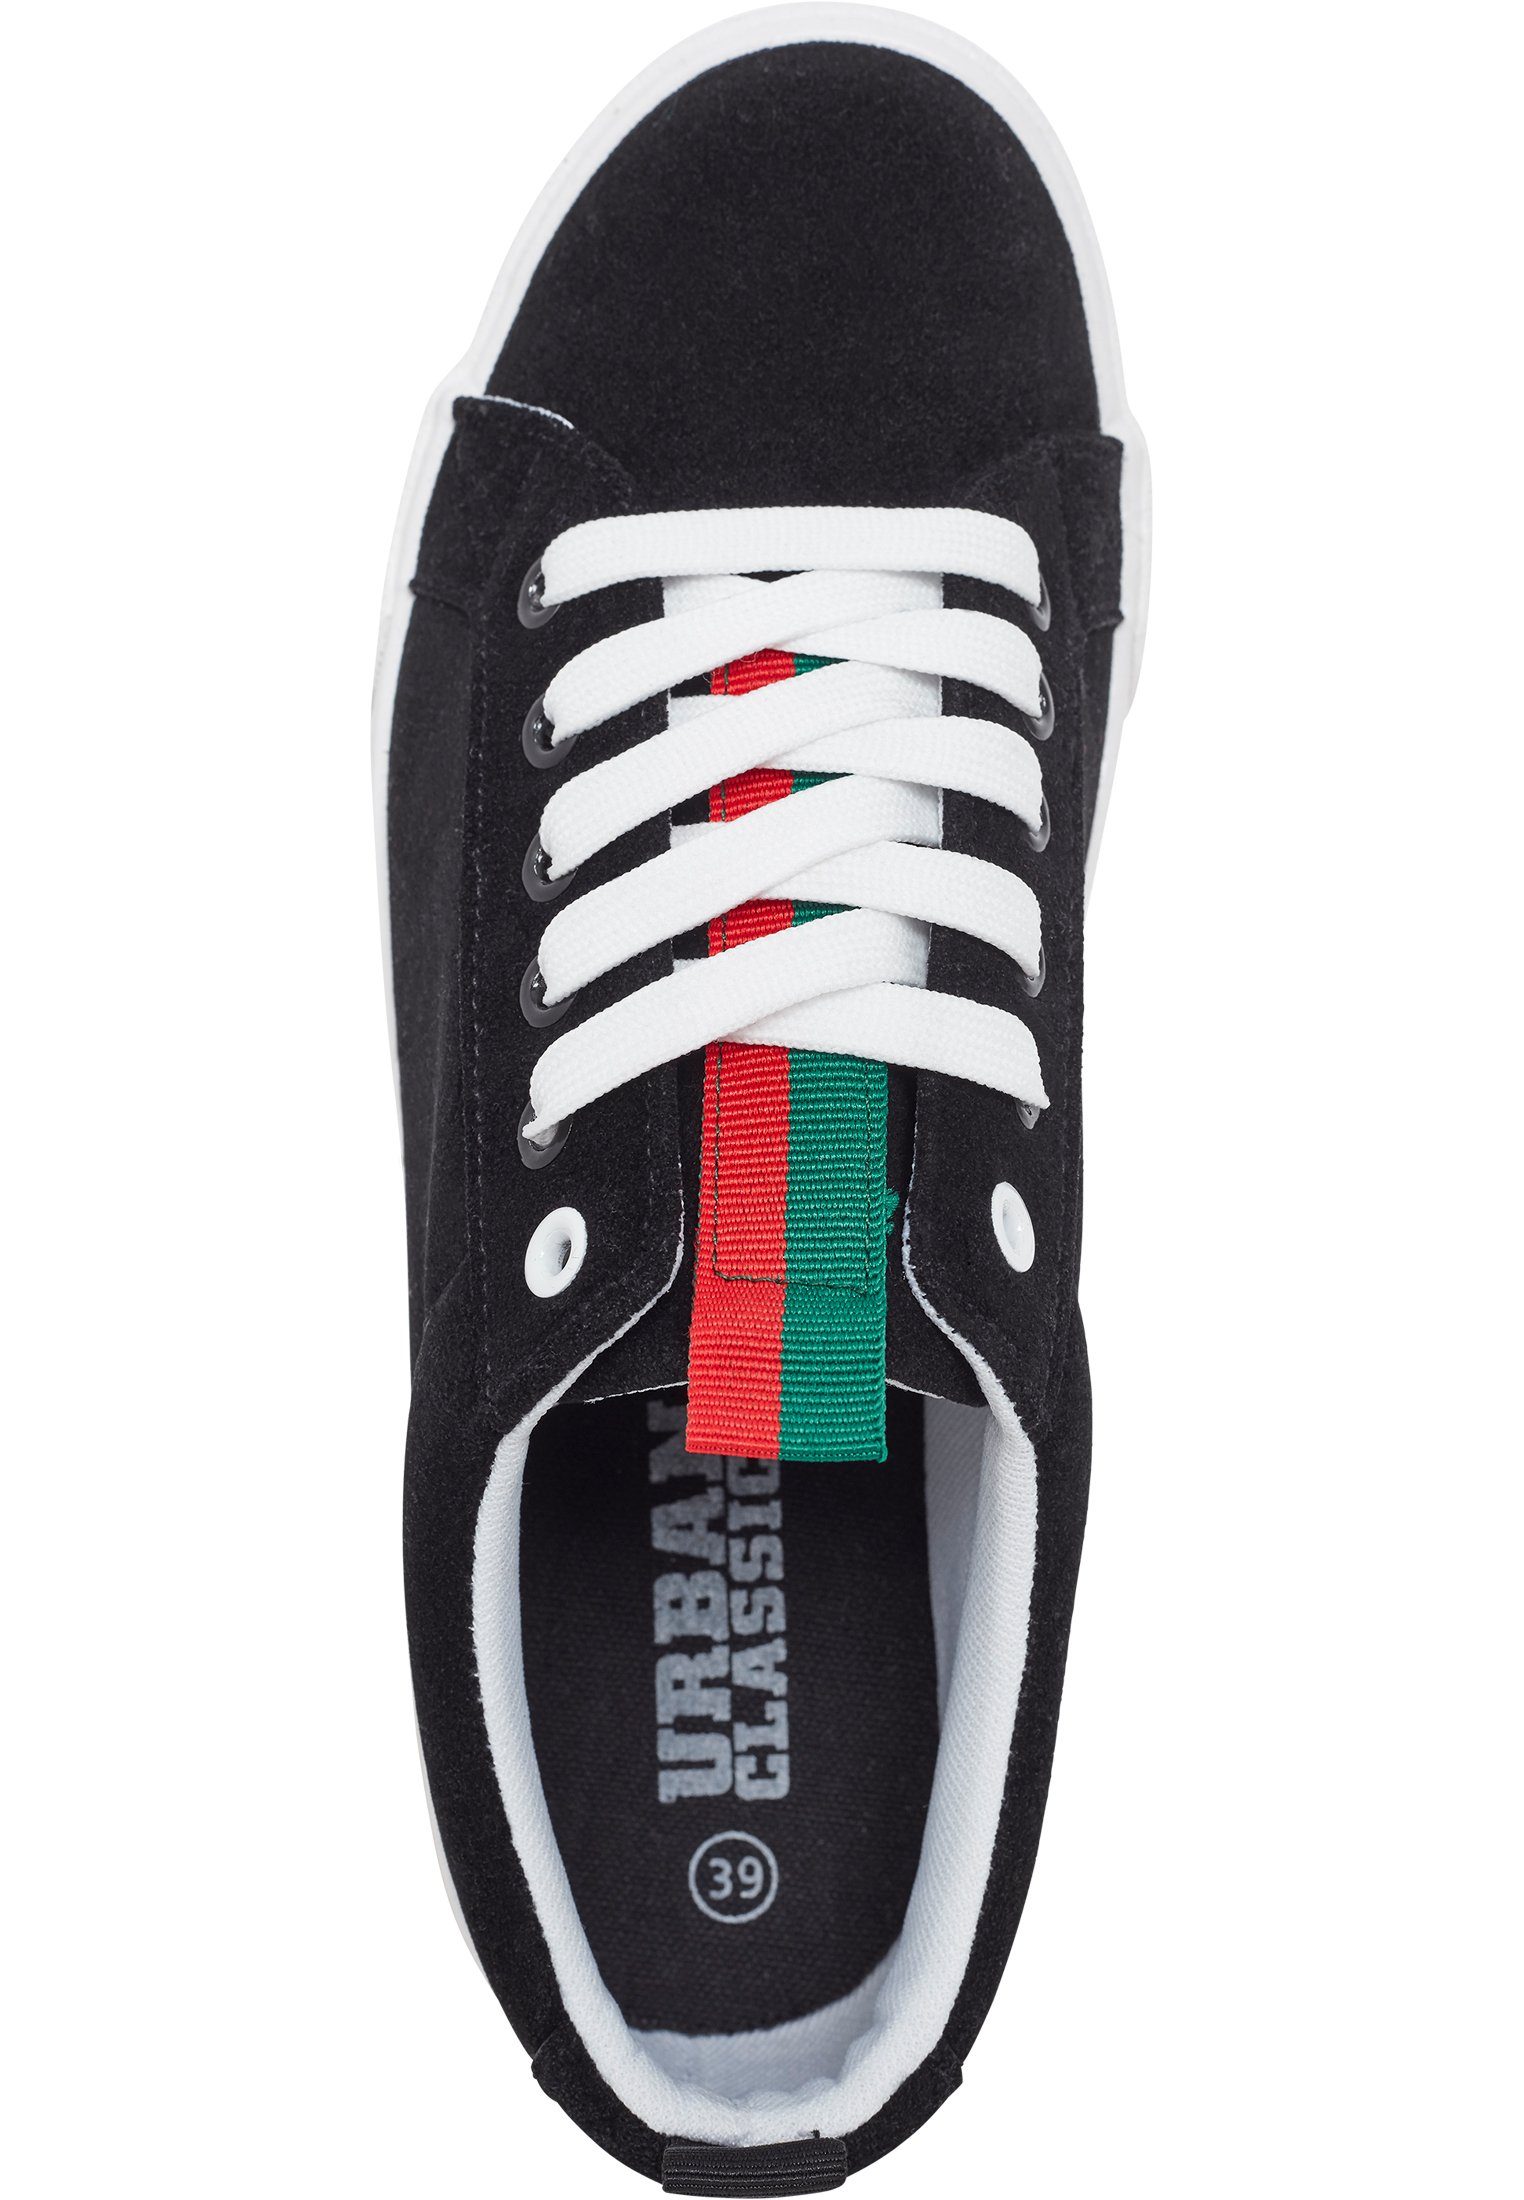 CLASSICS URBAN Velour blk/stripes Sneaker TB2123